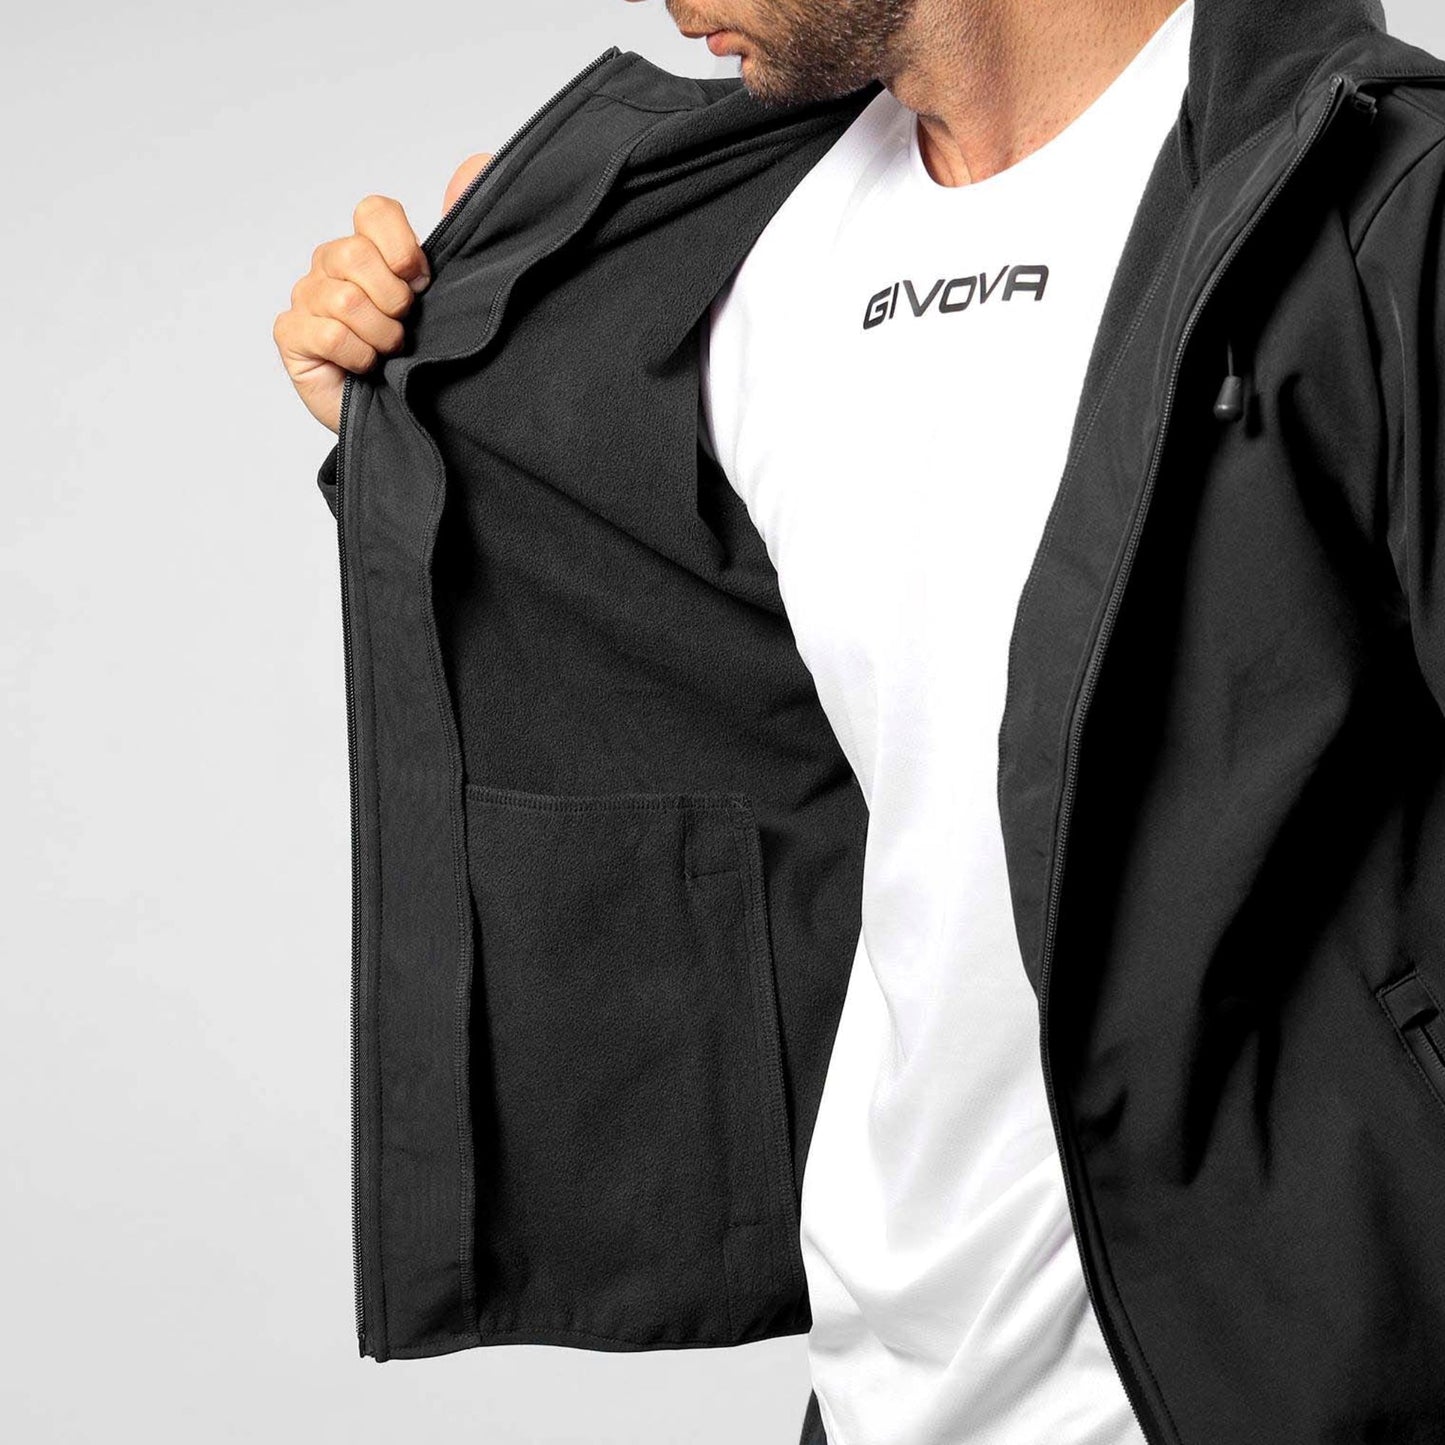 Givova Soft Shell Hooded Jacket - ITASPORT TEAMWEAR